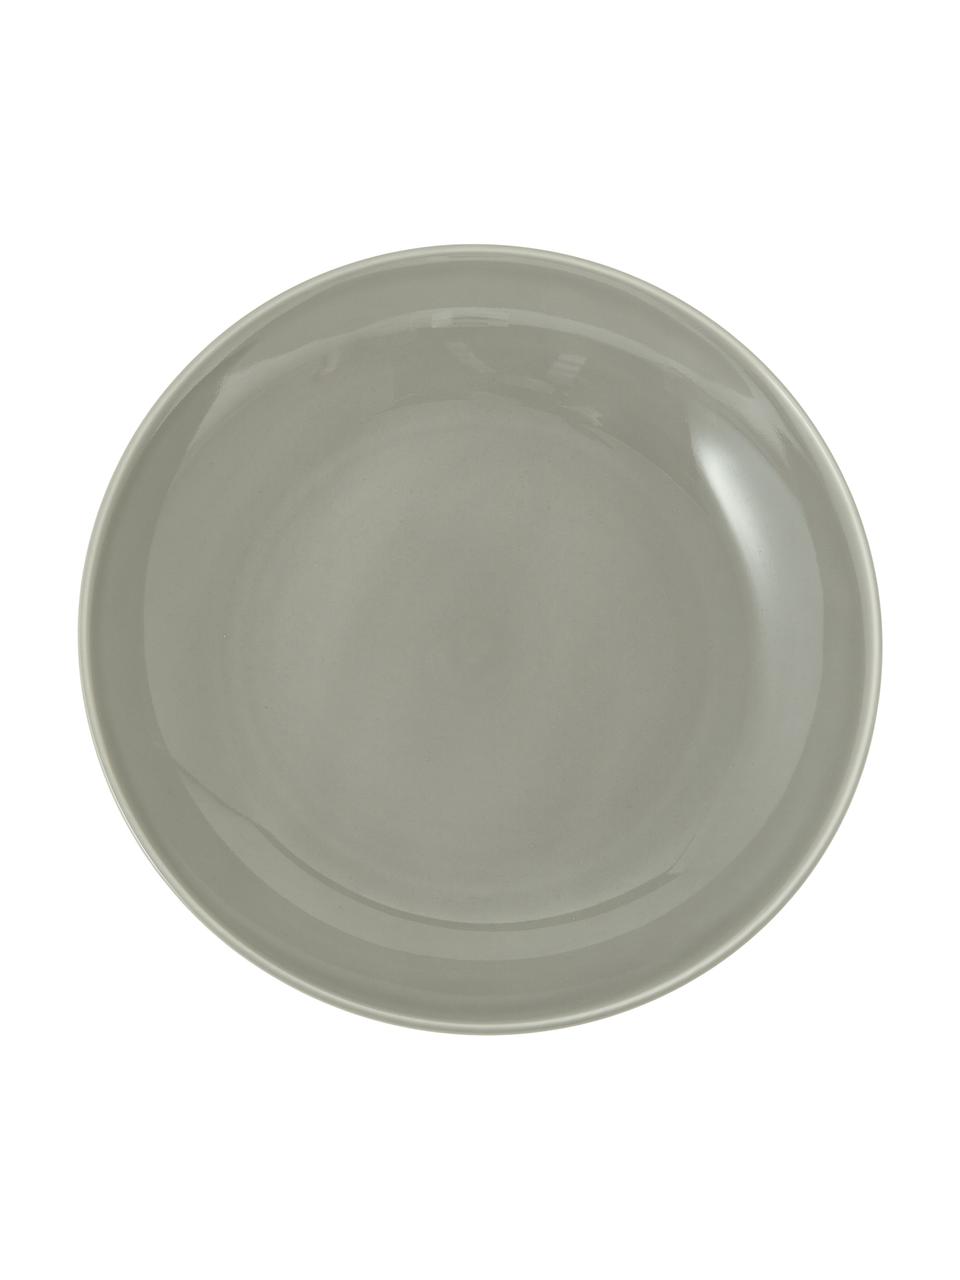 Porzellan-Suppenteller Kolibri in Grau glänzend, 6 Stück, Porzellan, Grau, Ø 24 cm